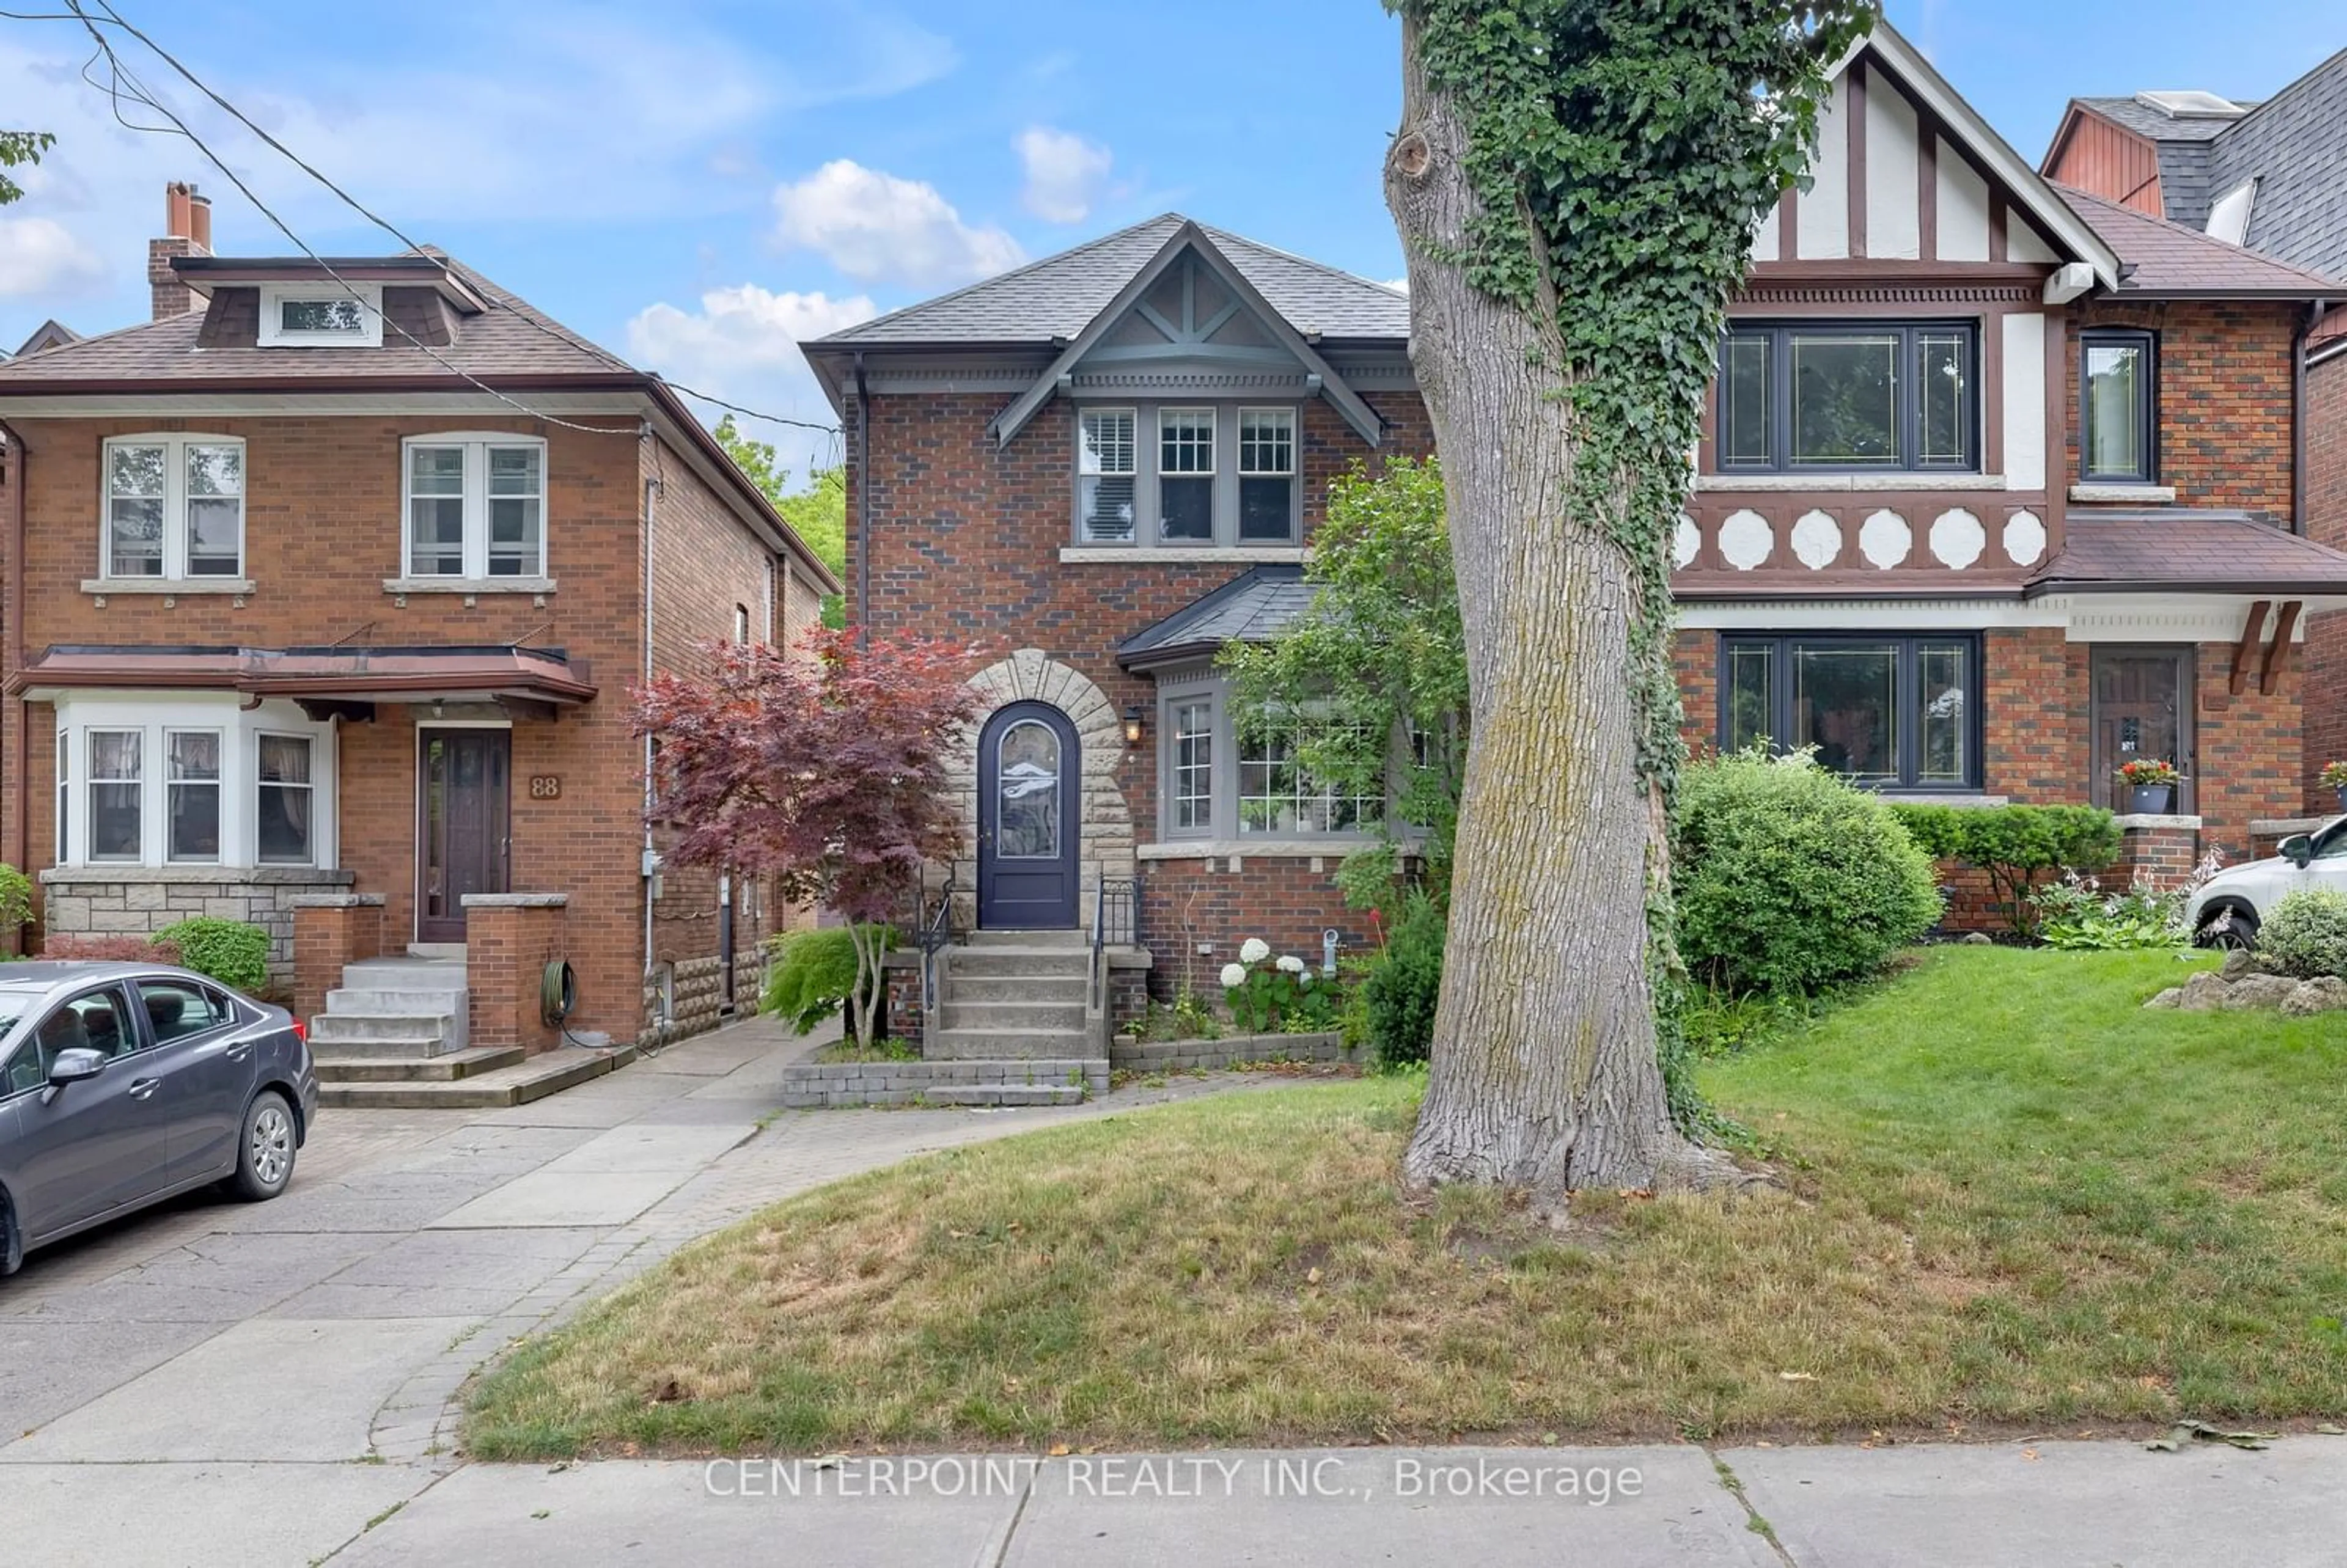 Home with brick exterior material for 90 Heddington Ave, Toronto Ontario M5N 2K8